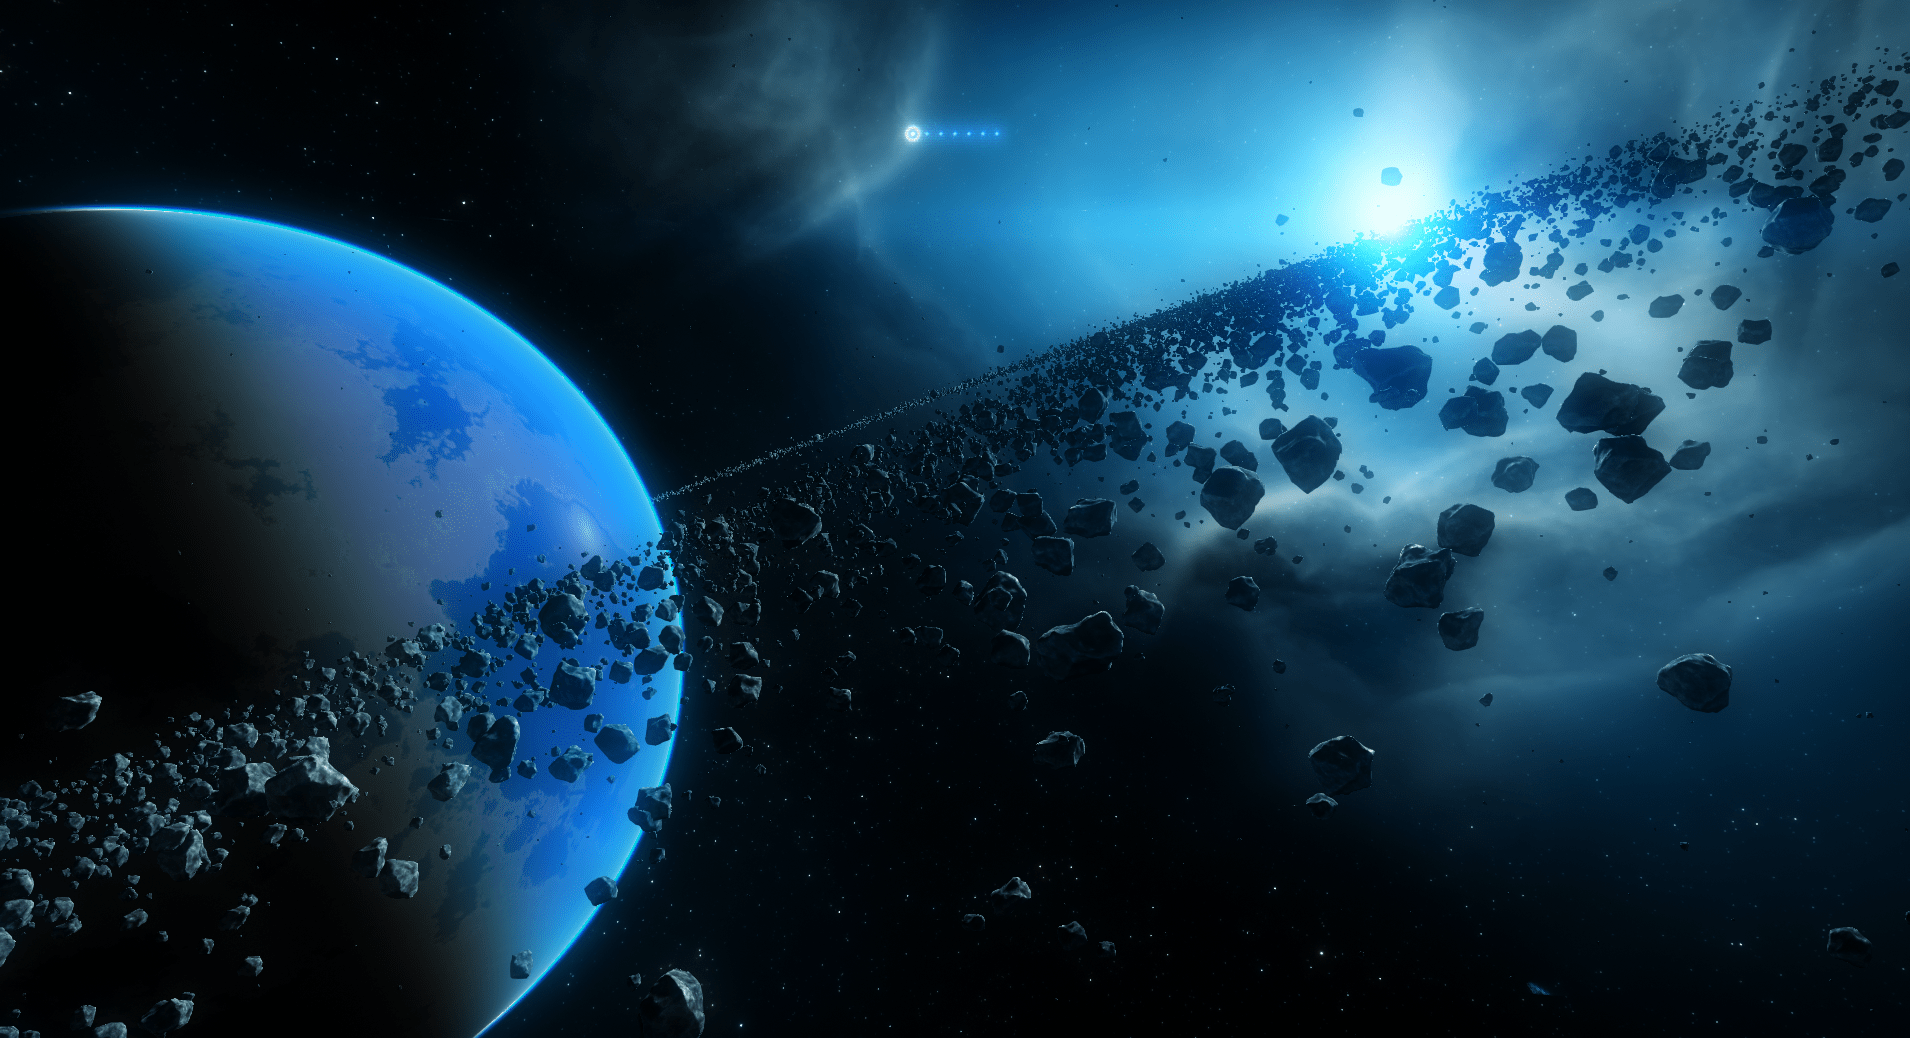 Asteroid Belt by Vadim Sadovski